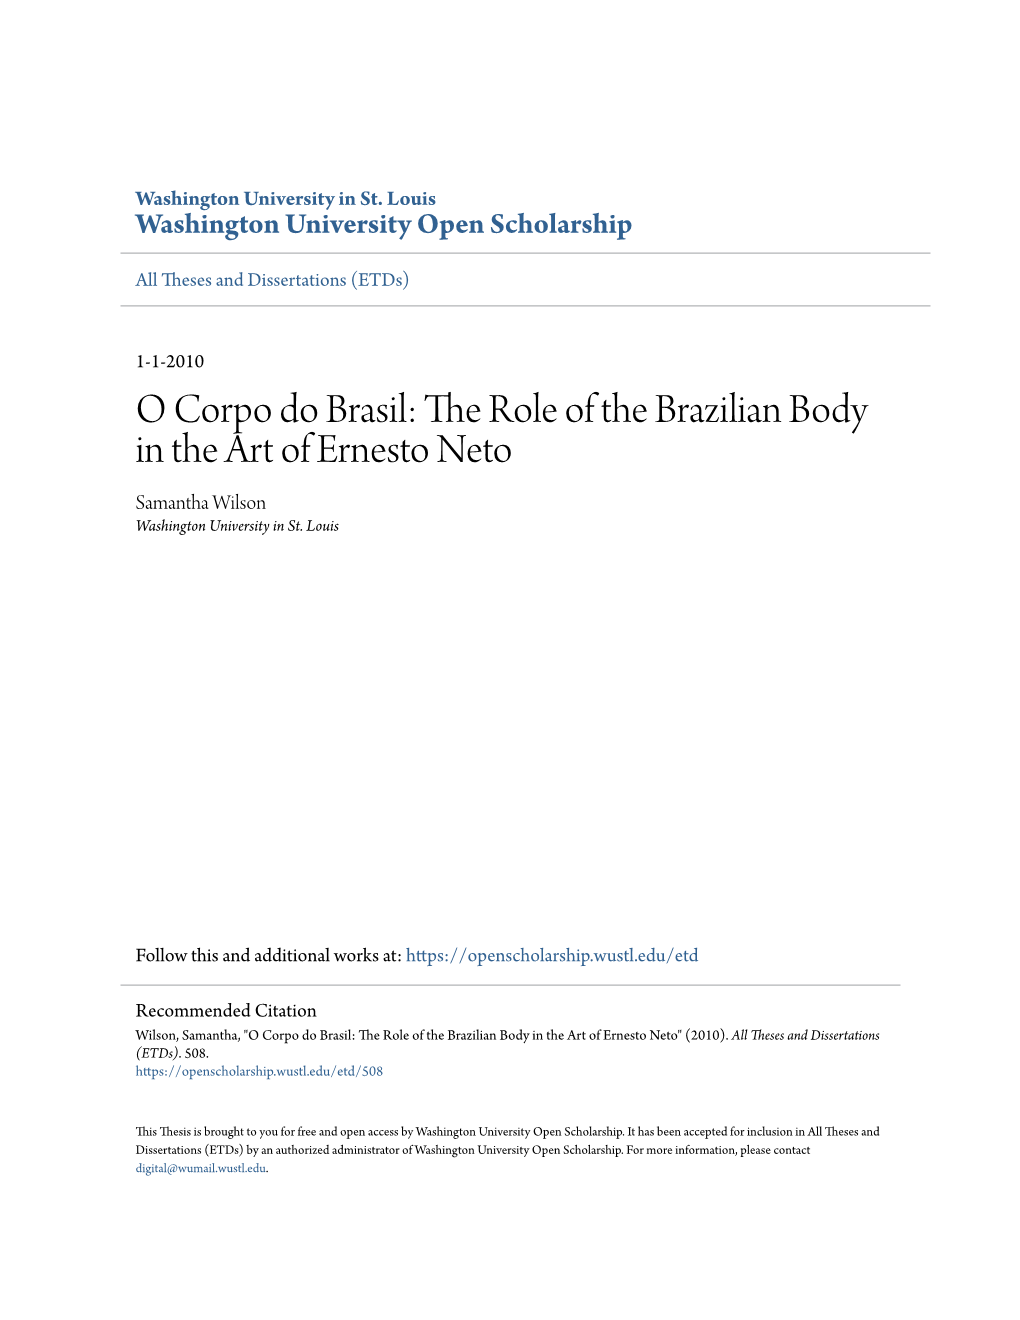 The Role of the Brazilian Body in the Art of Ernesto Neto Samantha Wilson Washington University in St